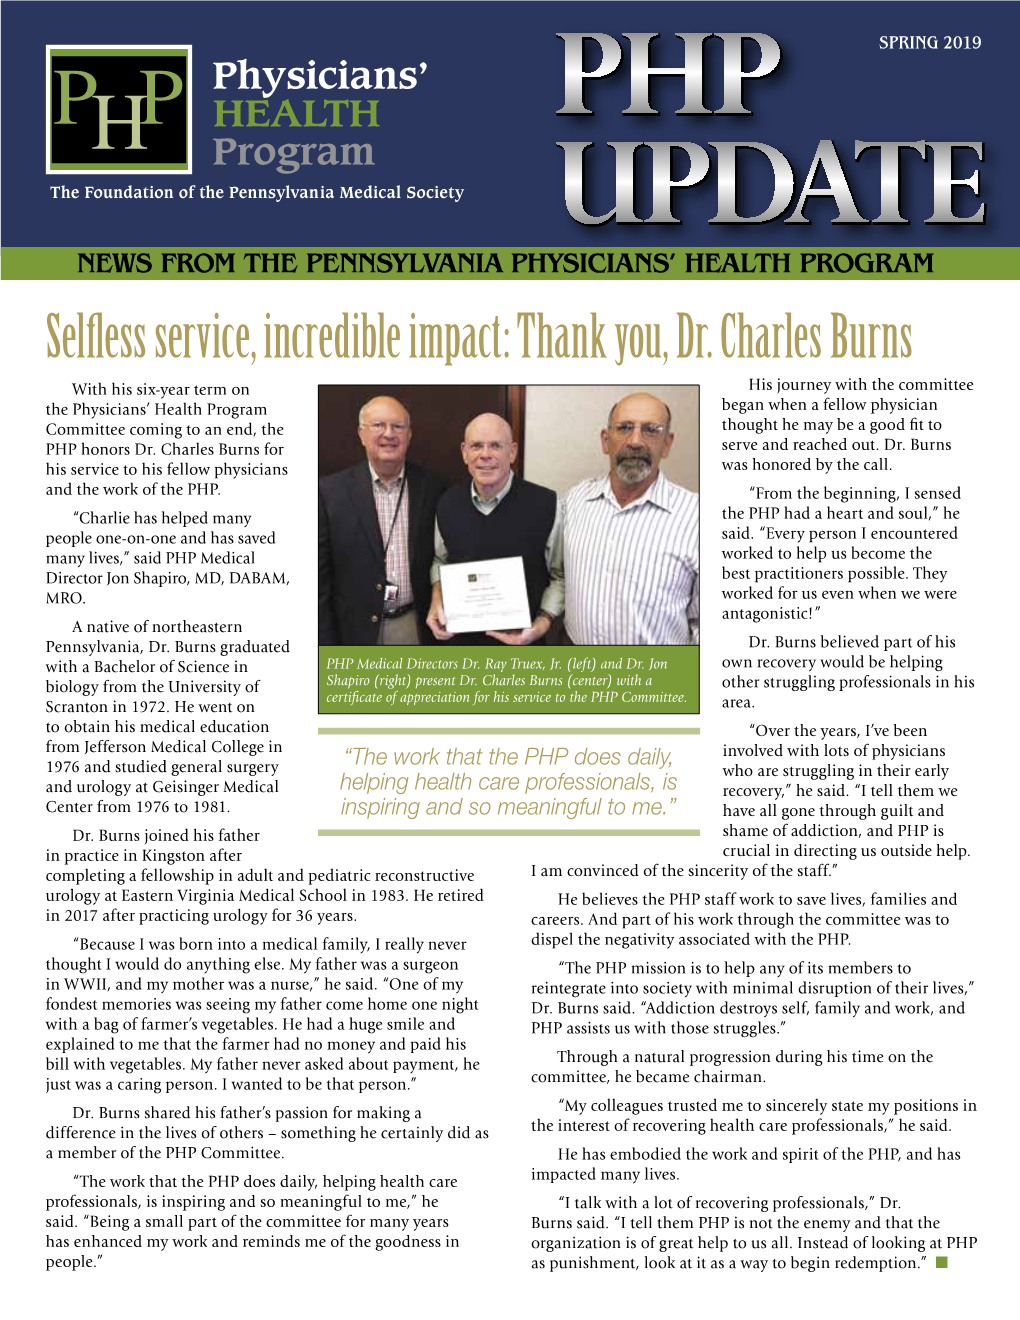 Selfless Service, Incredible Impact: Thank You, Dr. Charles Burns